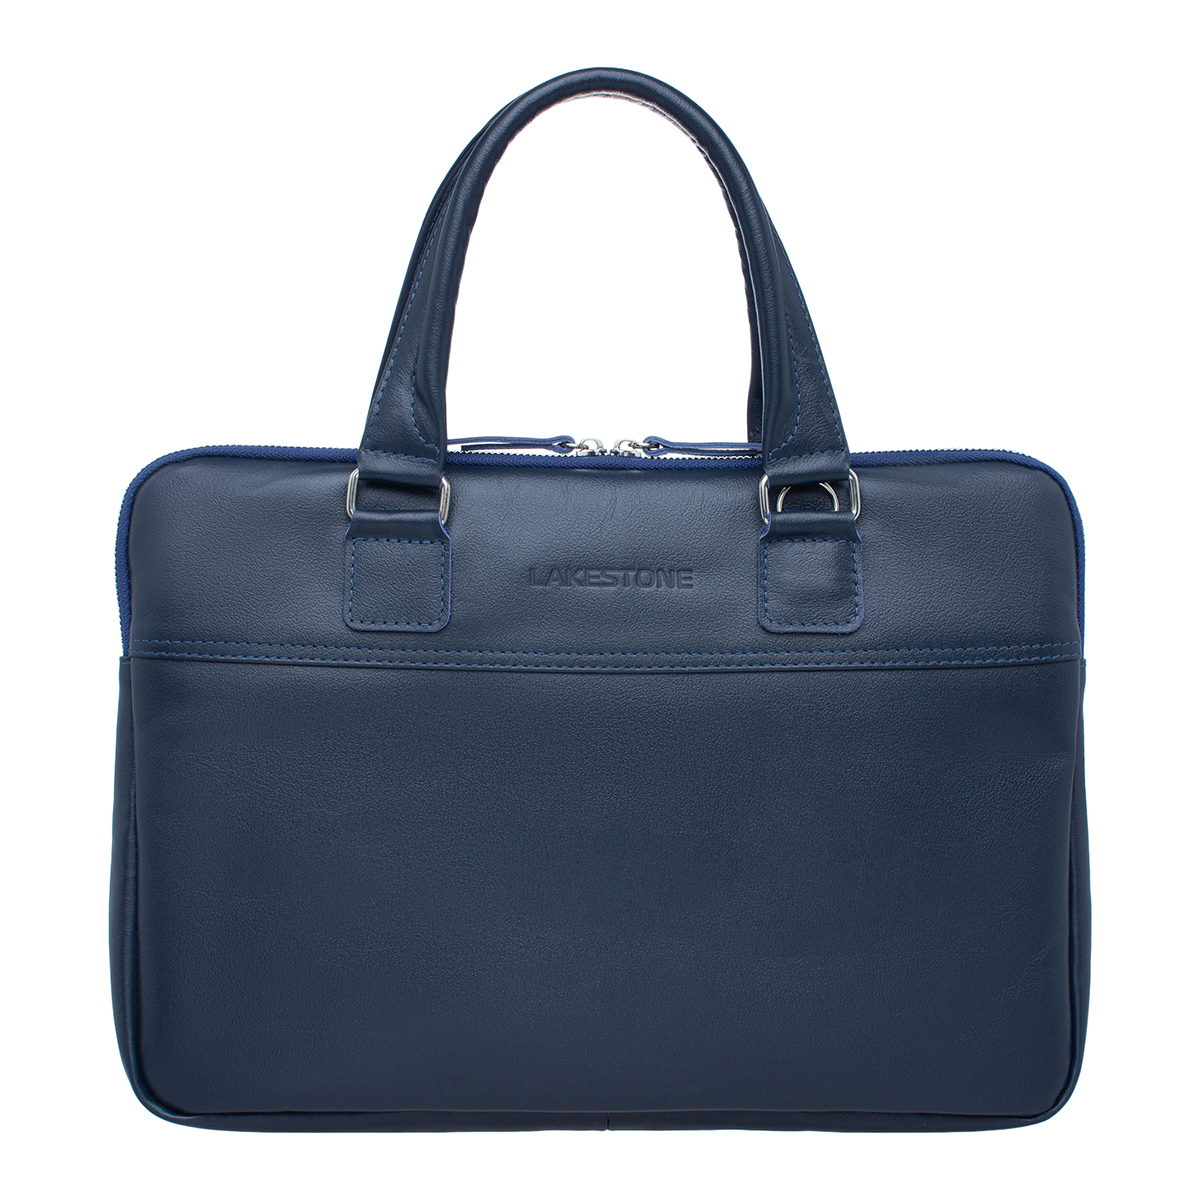 "Lakestone" Деловая сумка для ноутбука Anson Dark Blue